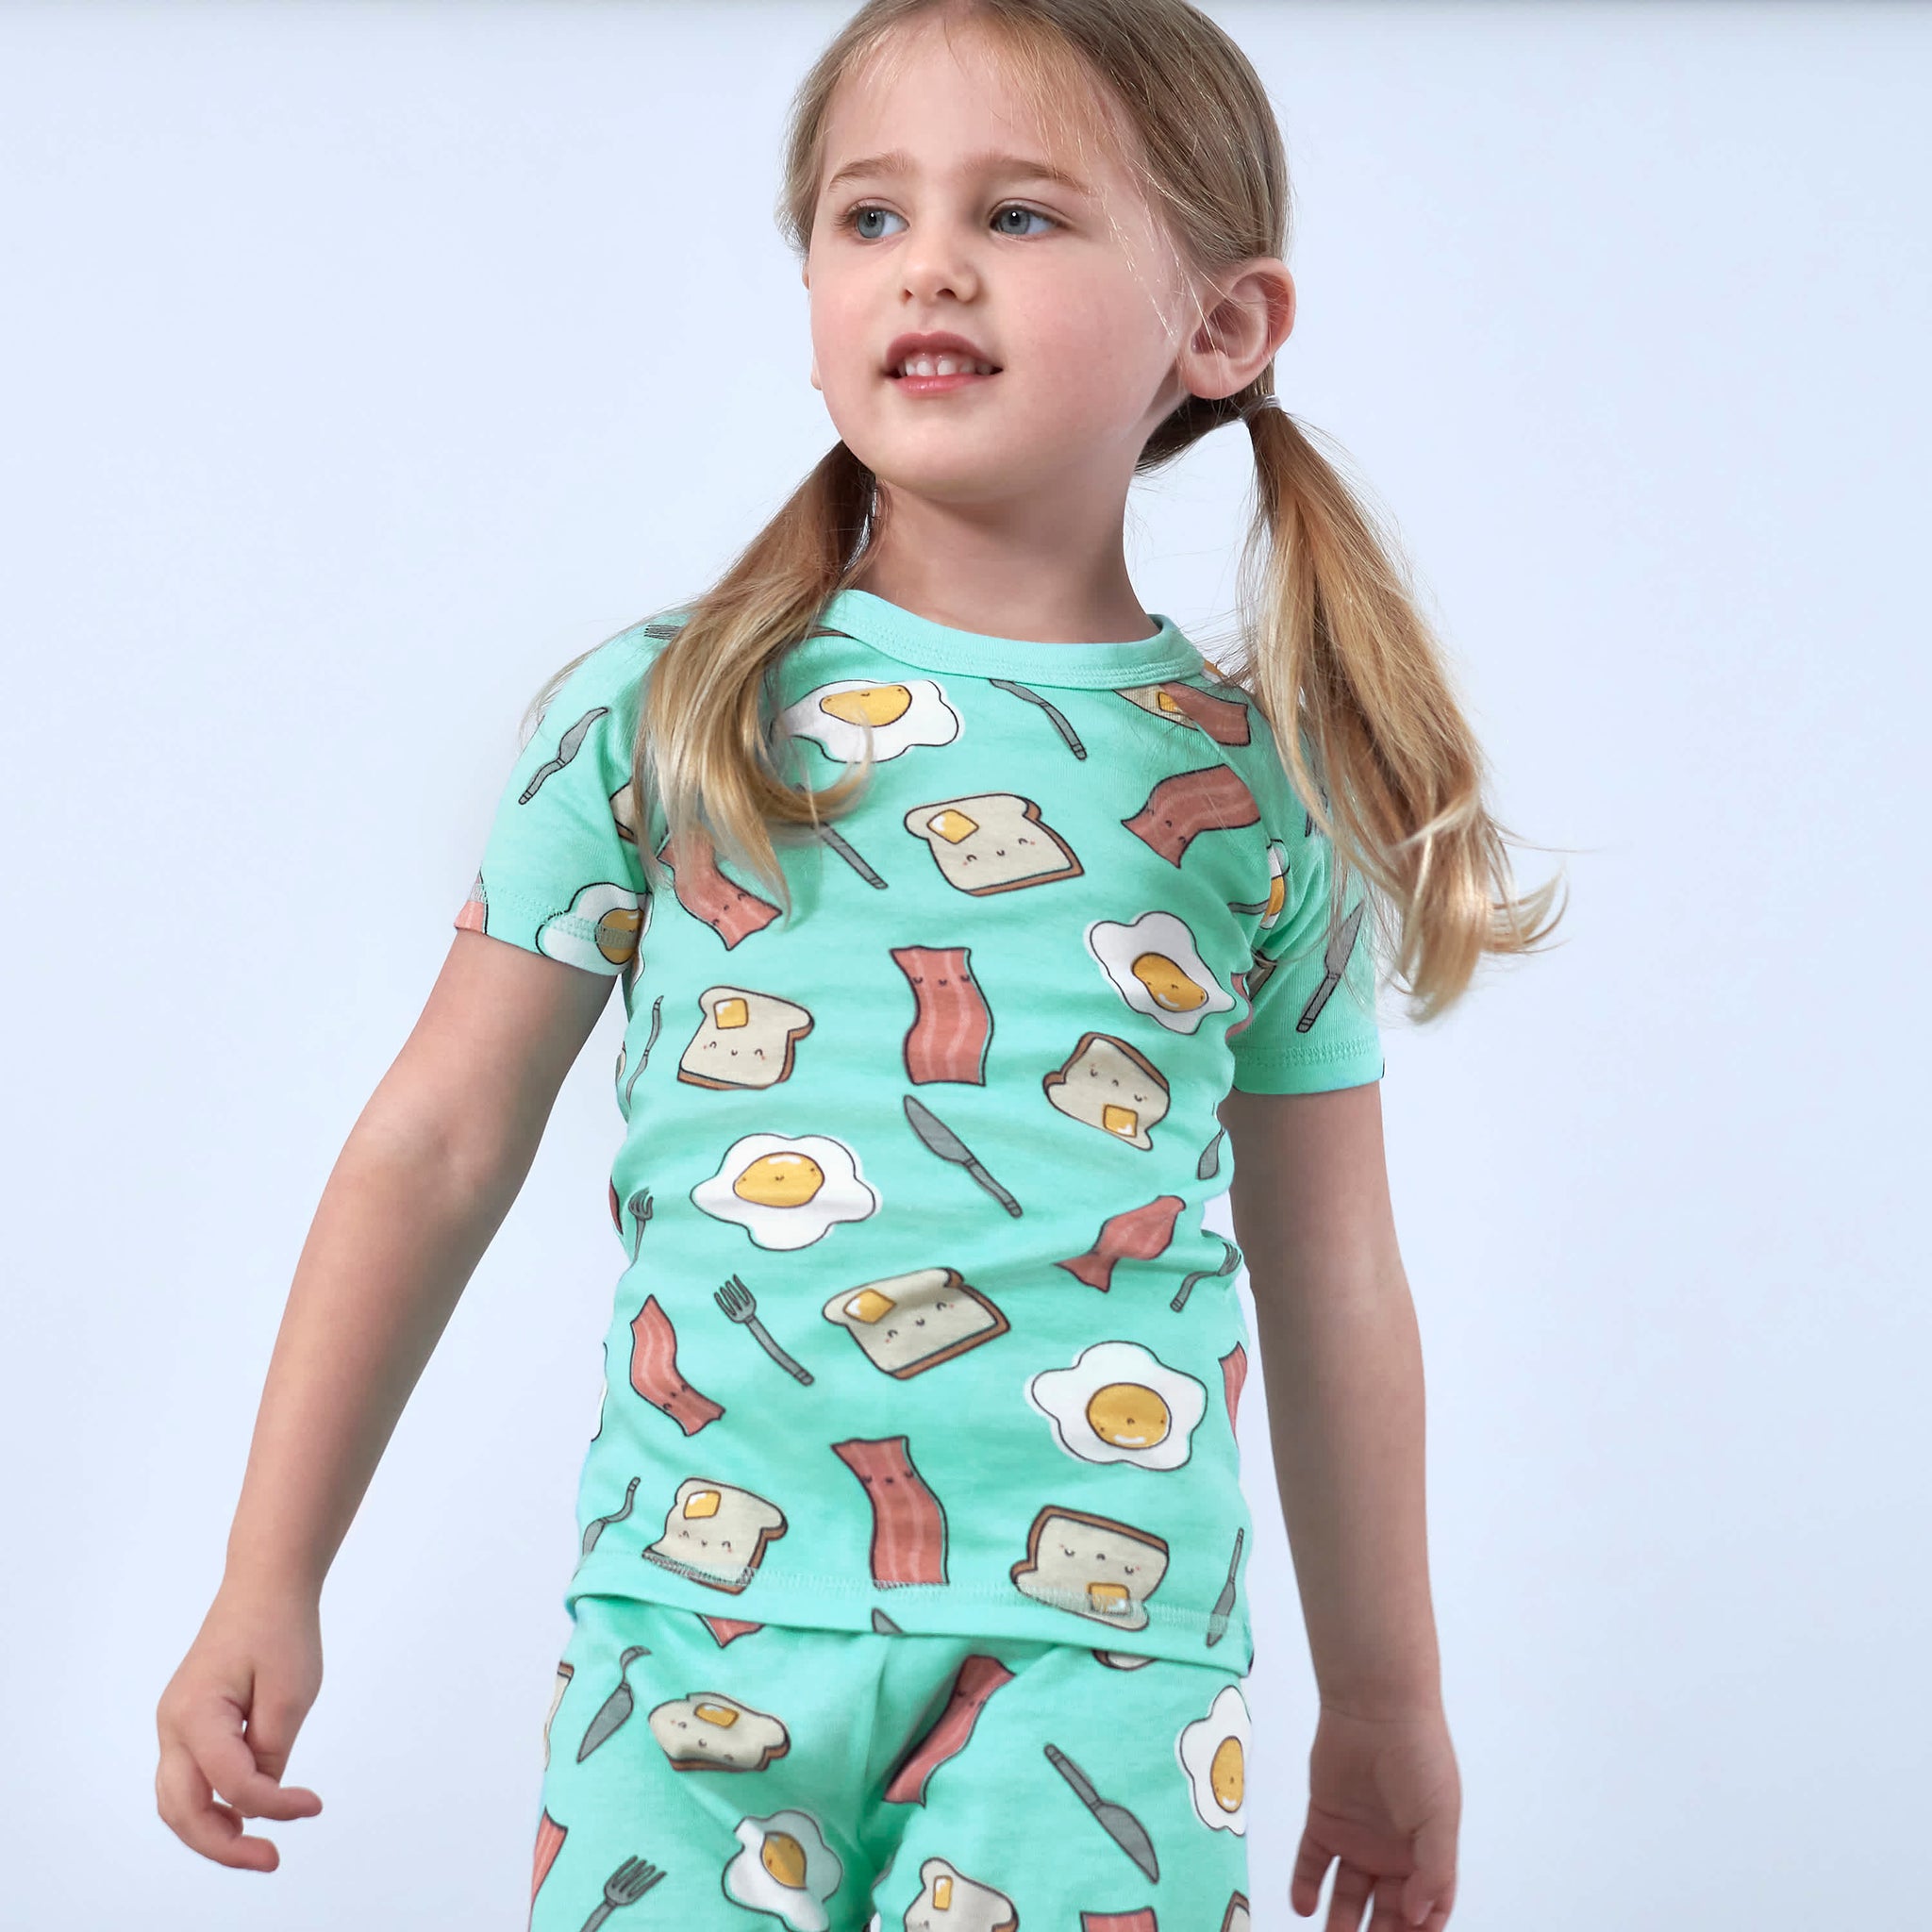 4-Piece Infant & Toddler Neutral Breakfast Snug Fit Cotton Pajamas-Gerber Childrenswear Wholesale